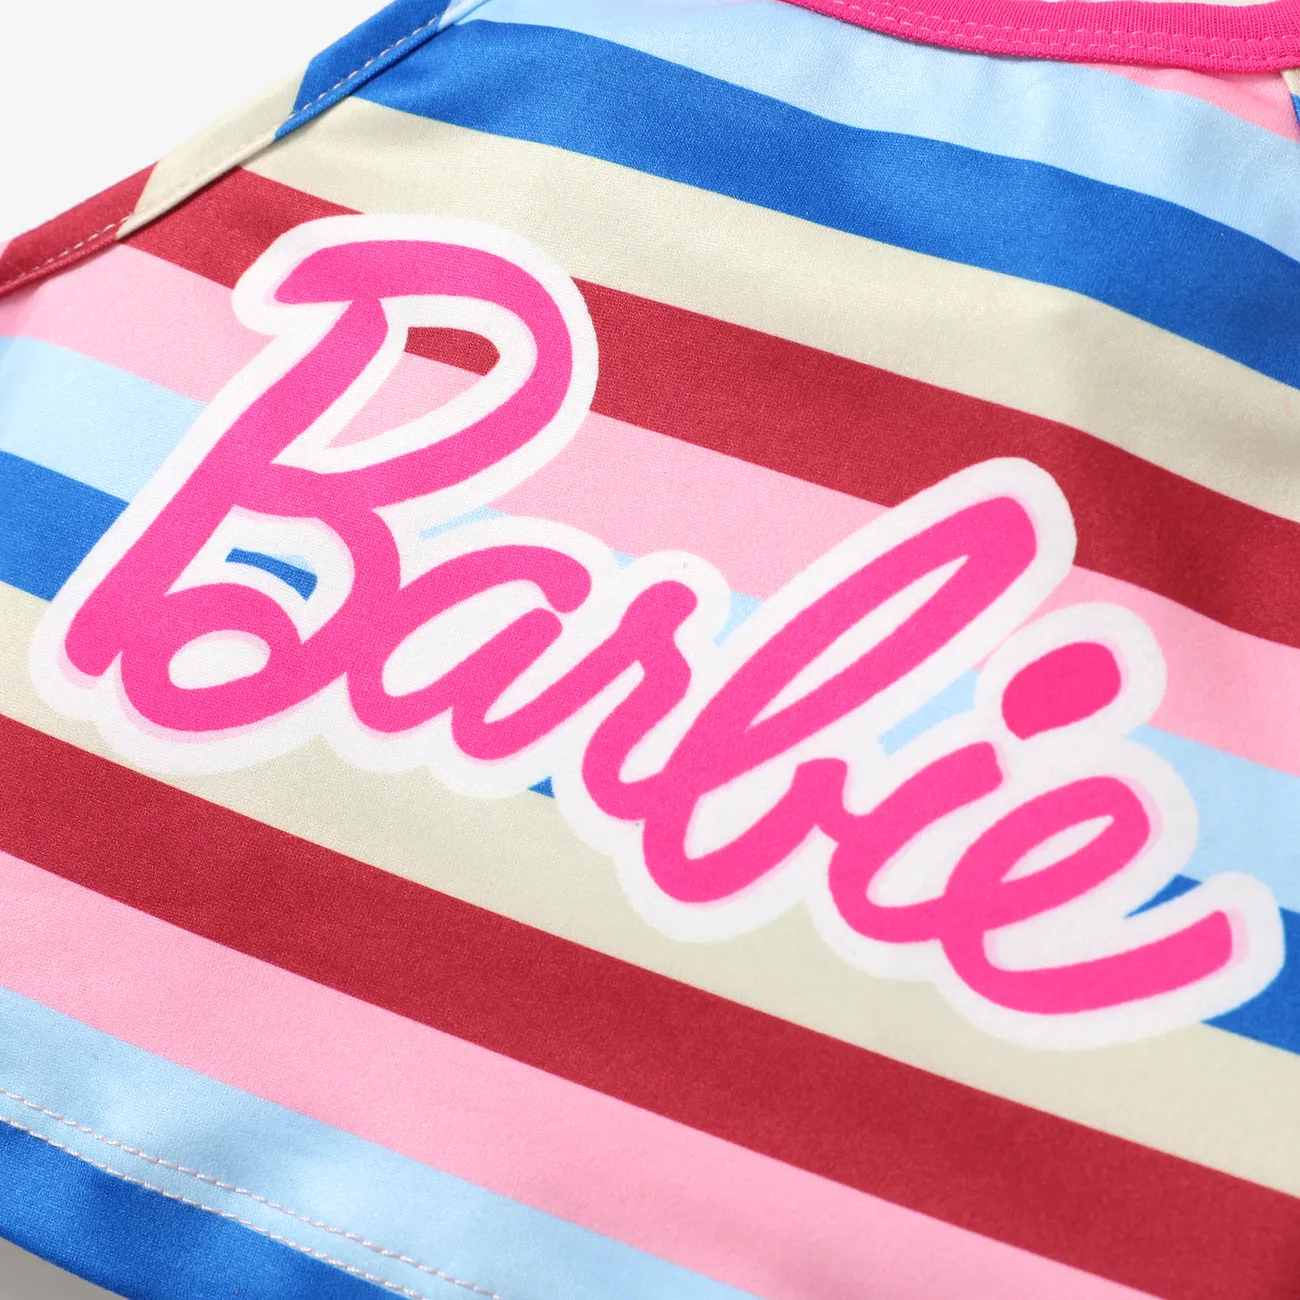 Barbie 1pc Toddler/Kids Girls Character Striped Toddler Tank top/denim shorts

 COLOREDSTRIPES big image 1